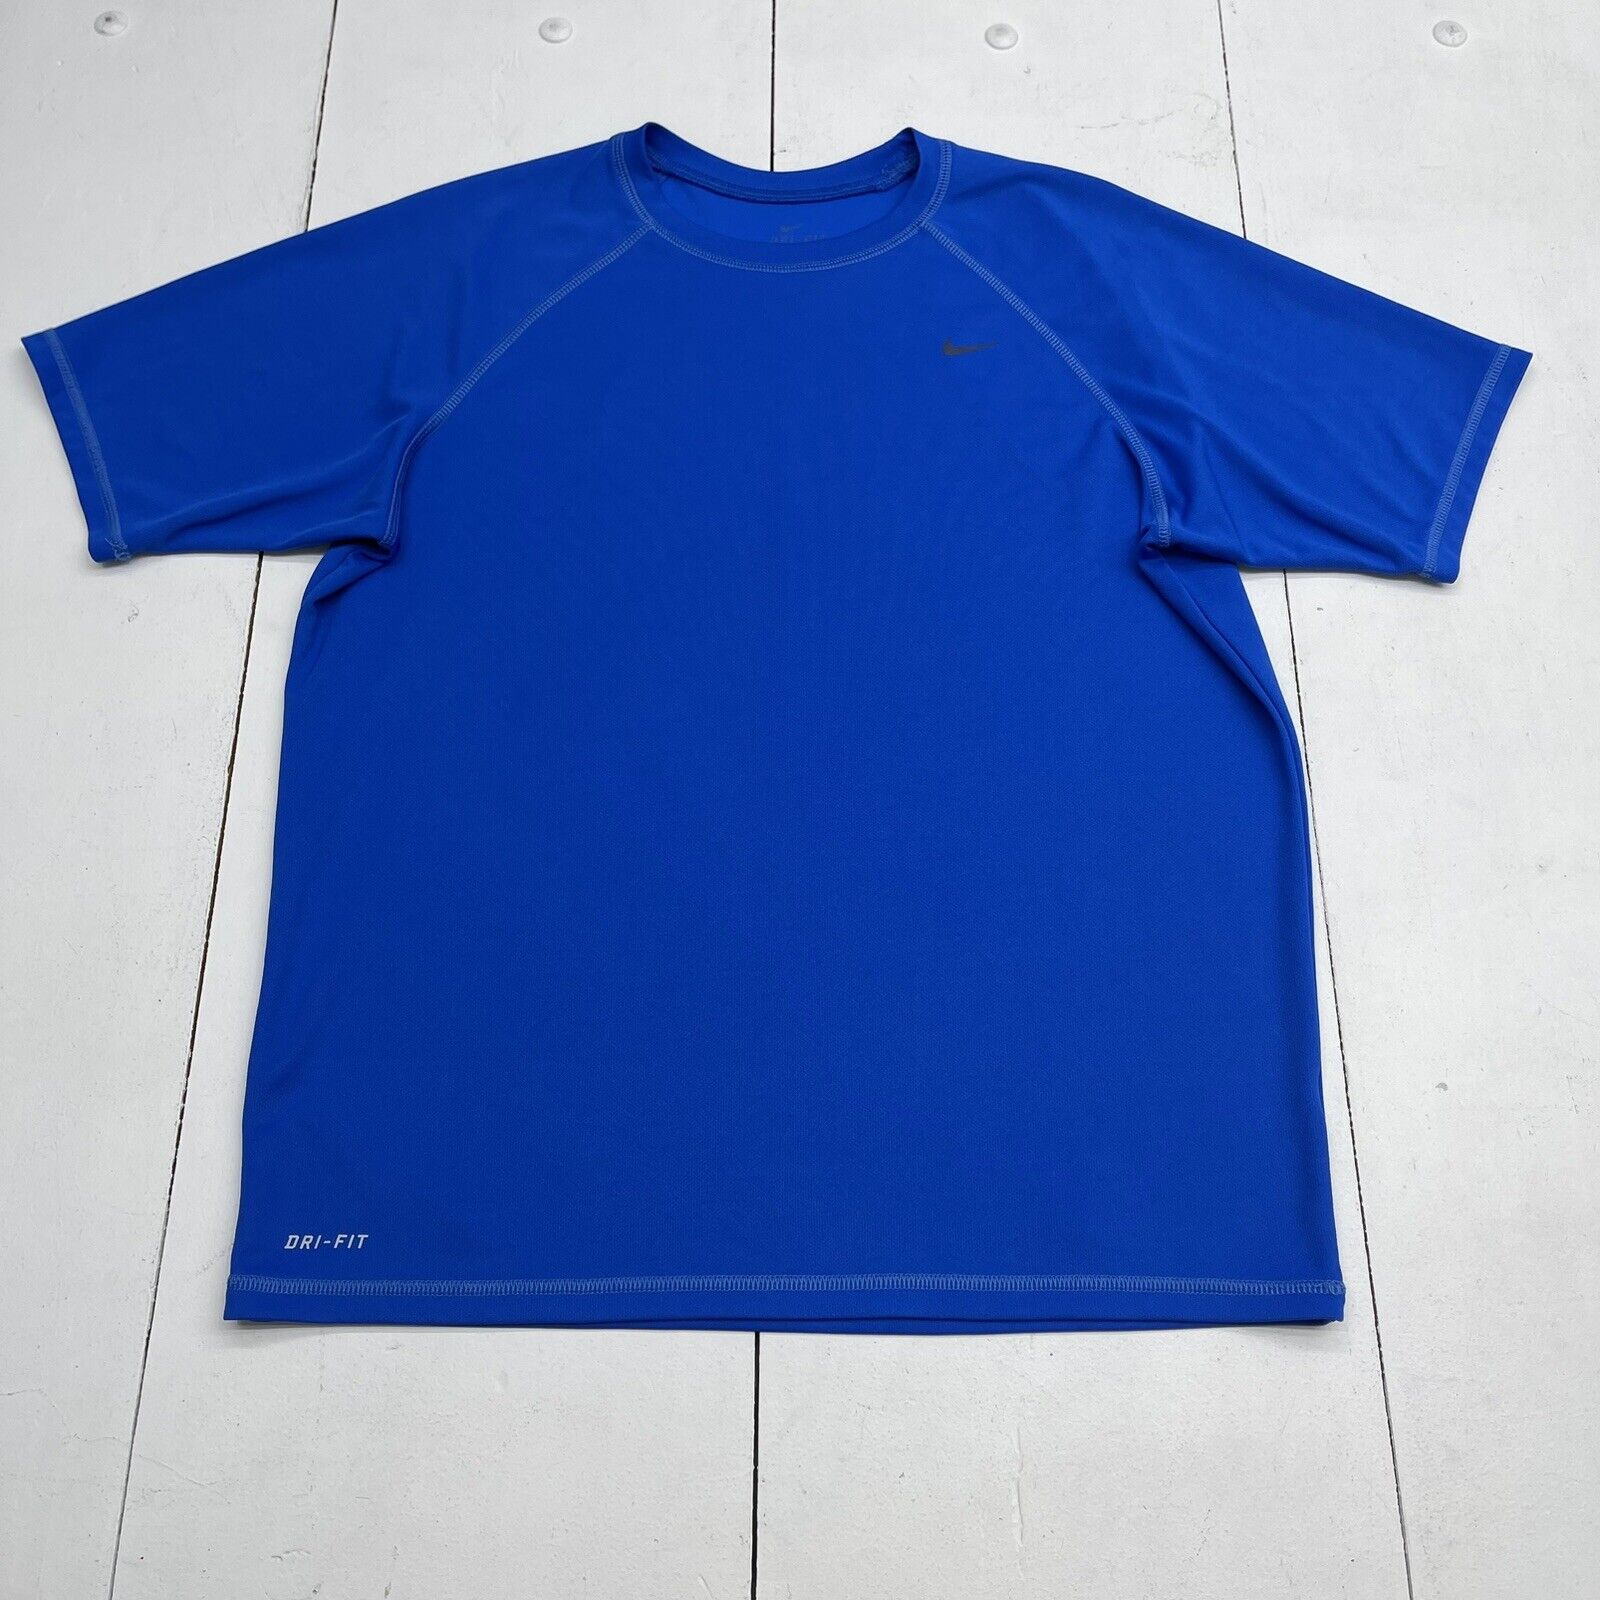 Nike Dri Fit Blue Short Sleeve Athletic T Shirt Mens Size Large